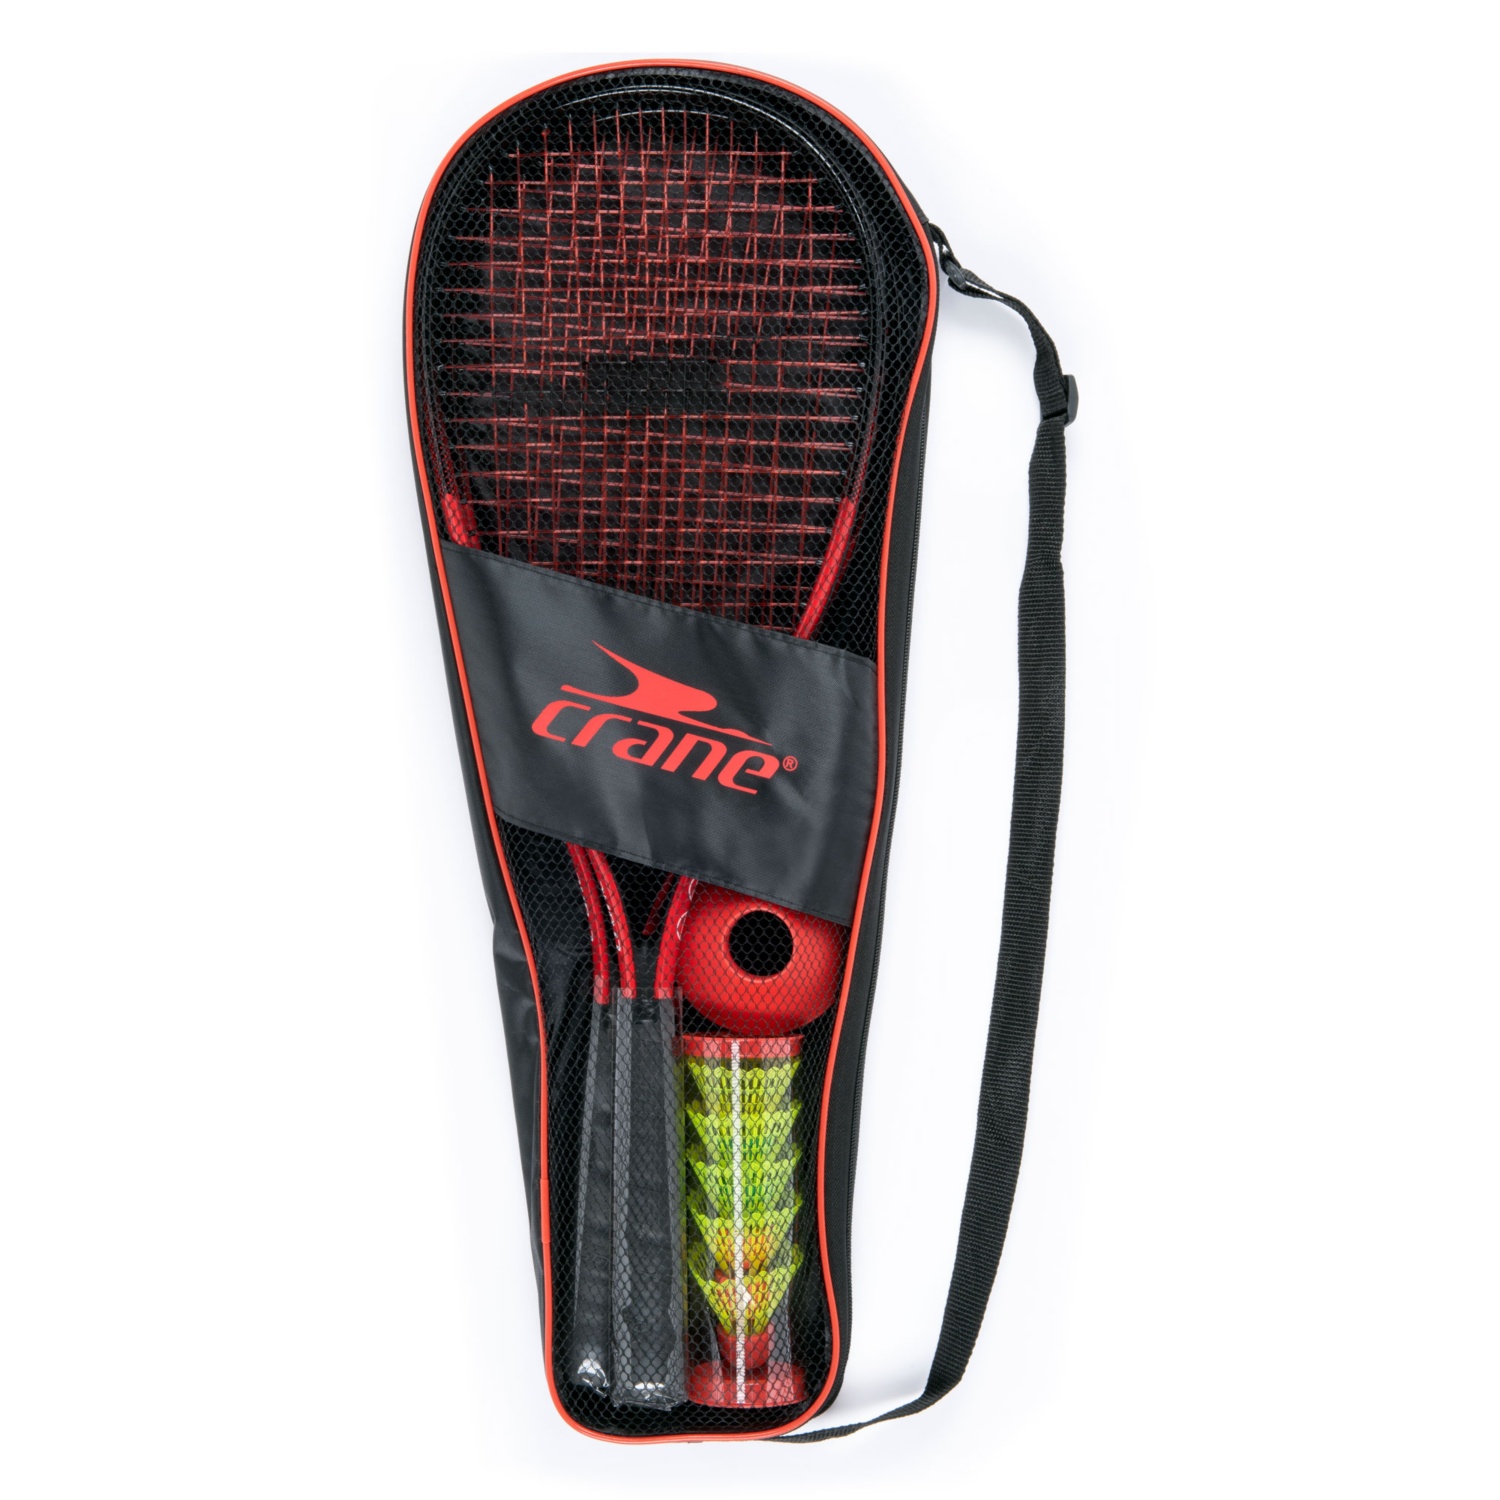 CRANE Turbo Badminton Set